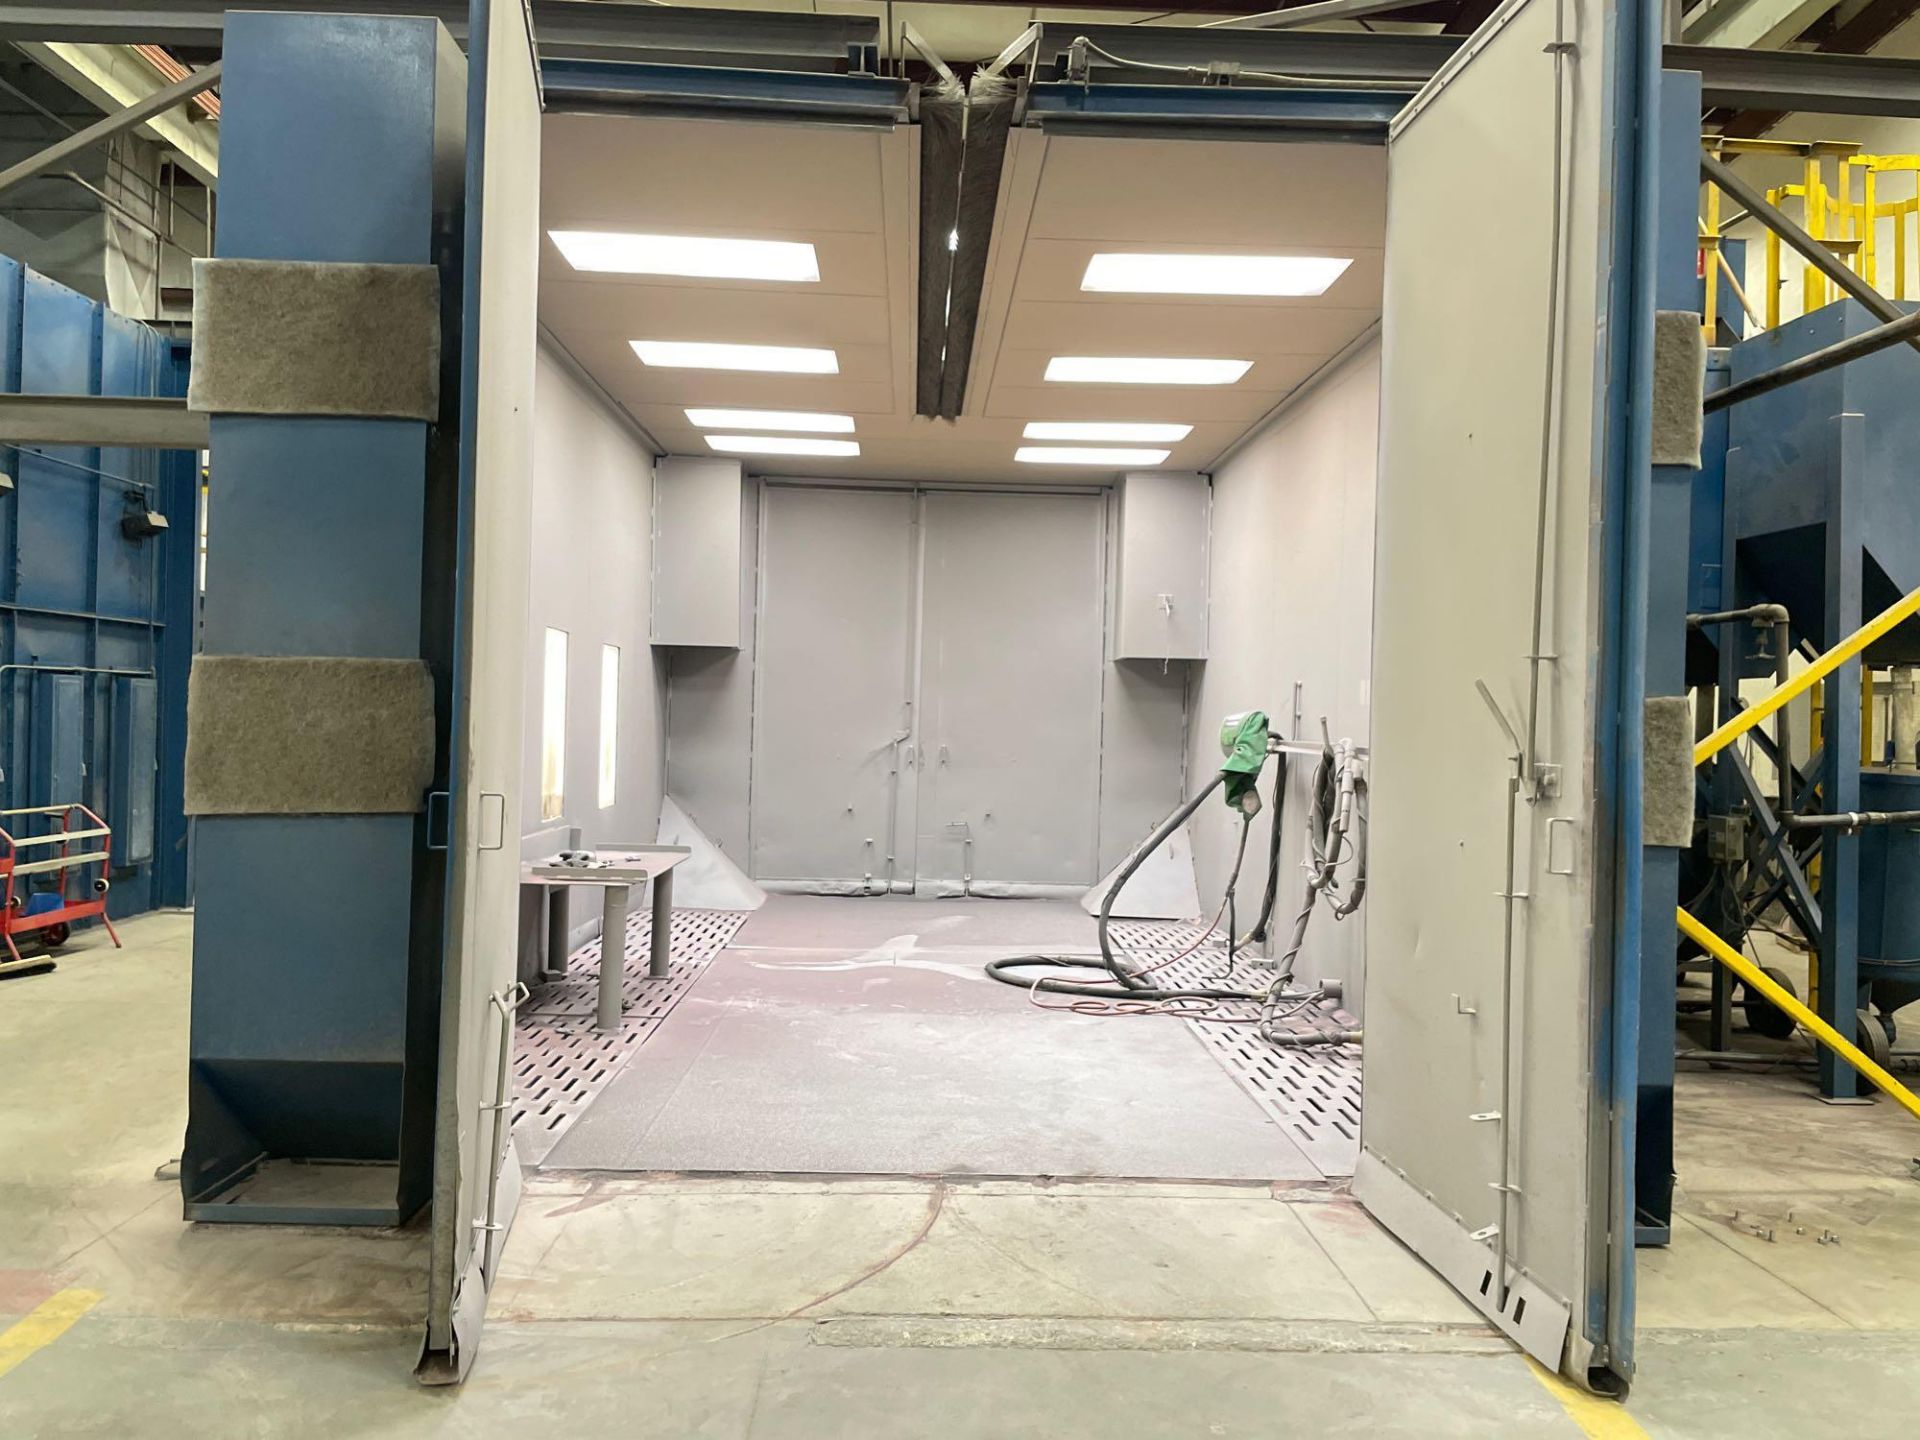 Hoffman Abrasive Blast booth, approx 18' x 12' x 12'h, perforated floor, media conveyor, elevator - Image 9 of 9